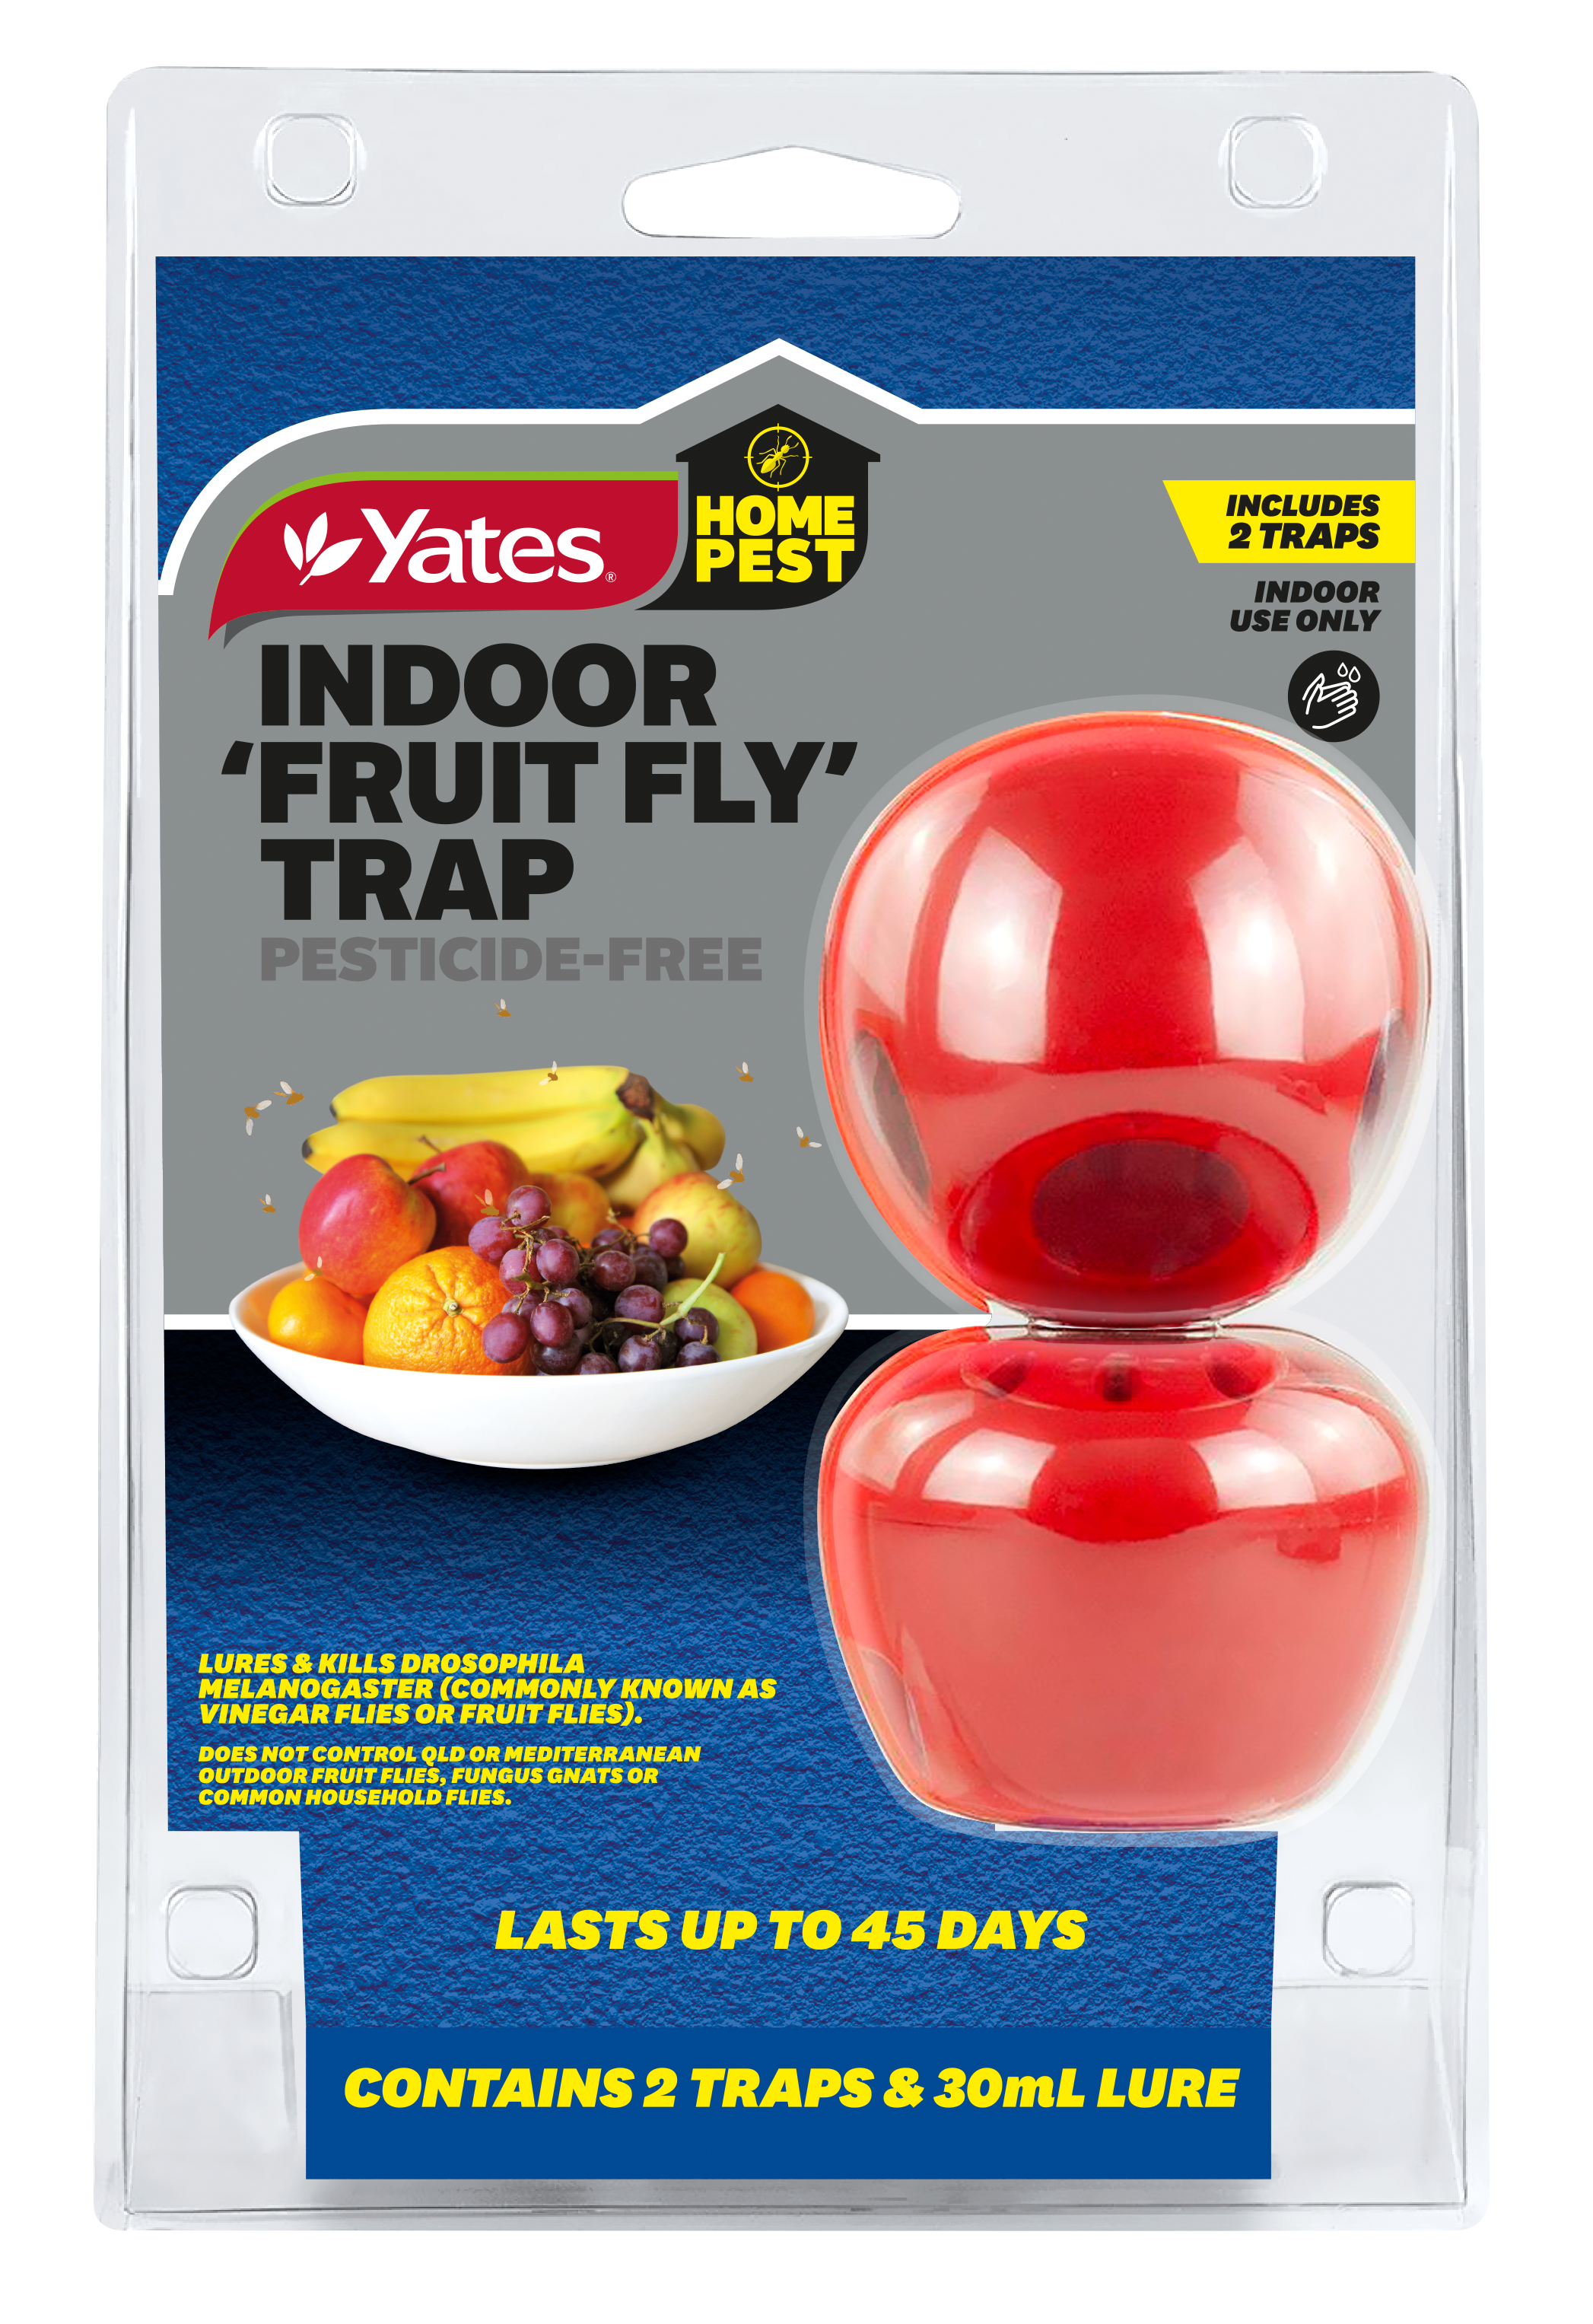 https://www.yates.com.au/media/fmjefj4p/56342_yates-home-pest-indoor-fruit-fly-trap_2-pack_fop.png